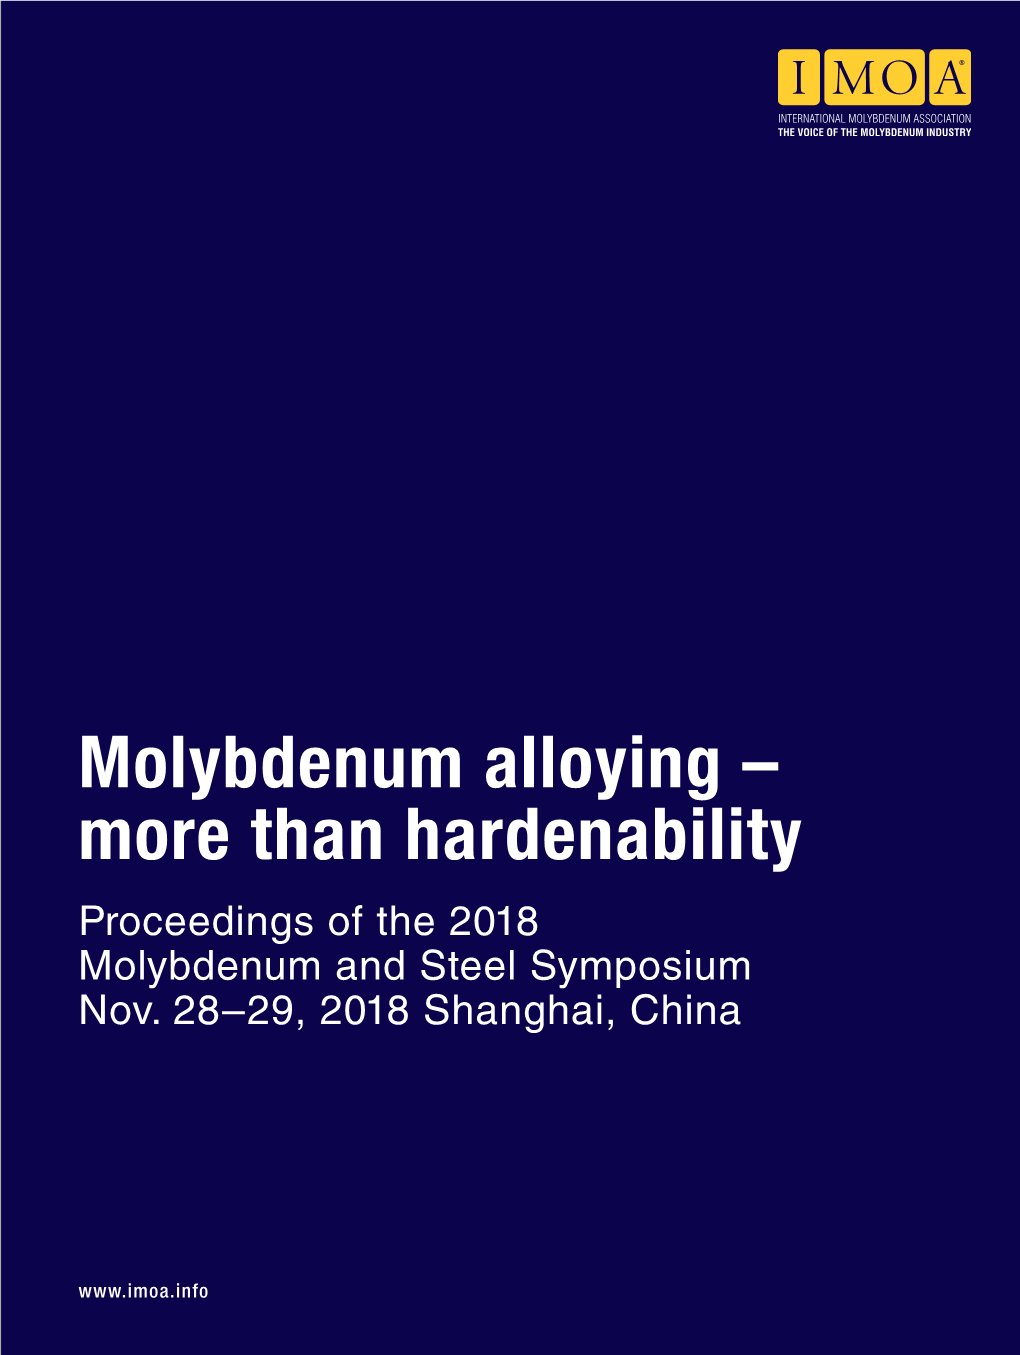 Molybdenum Alloying – More Than Hardenability Proceedings of the 2018 Molybdenum and Steel Symposium Nov